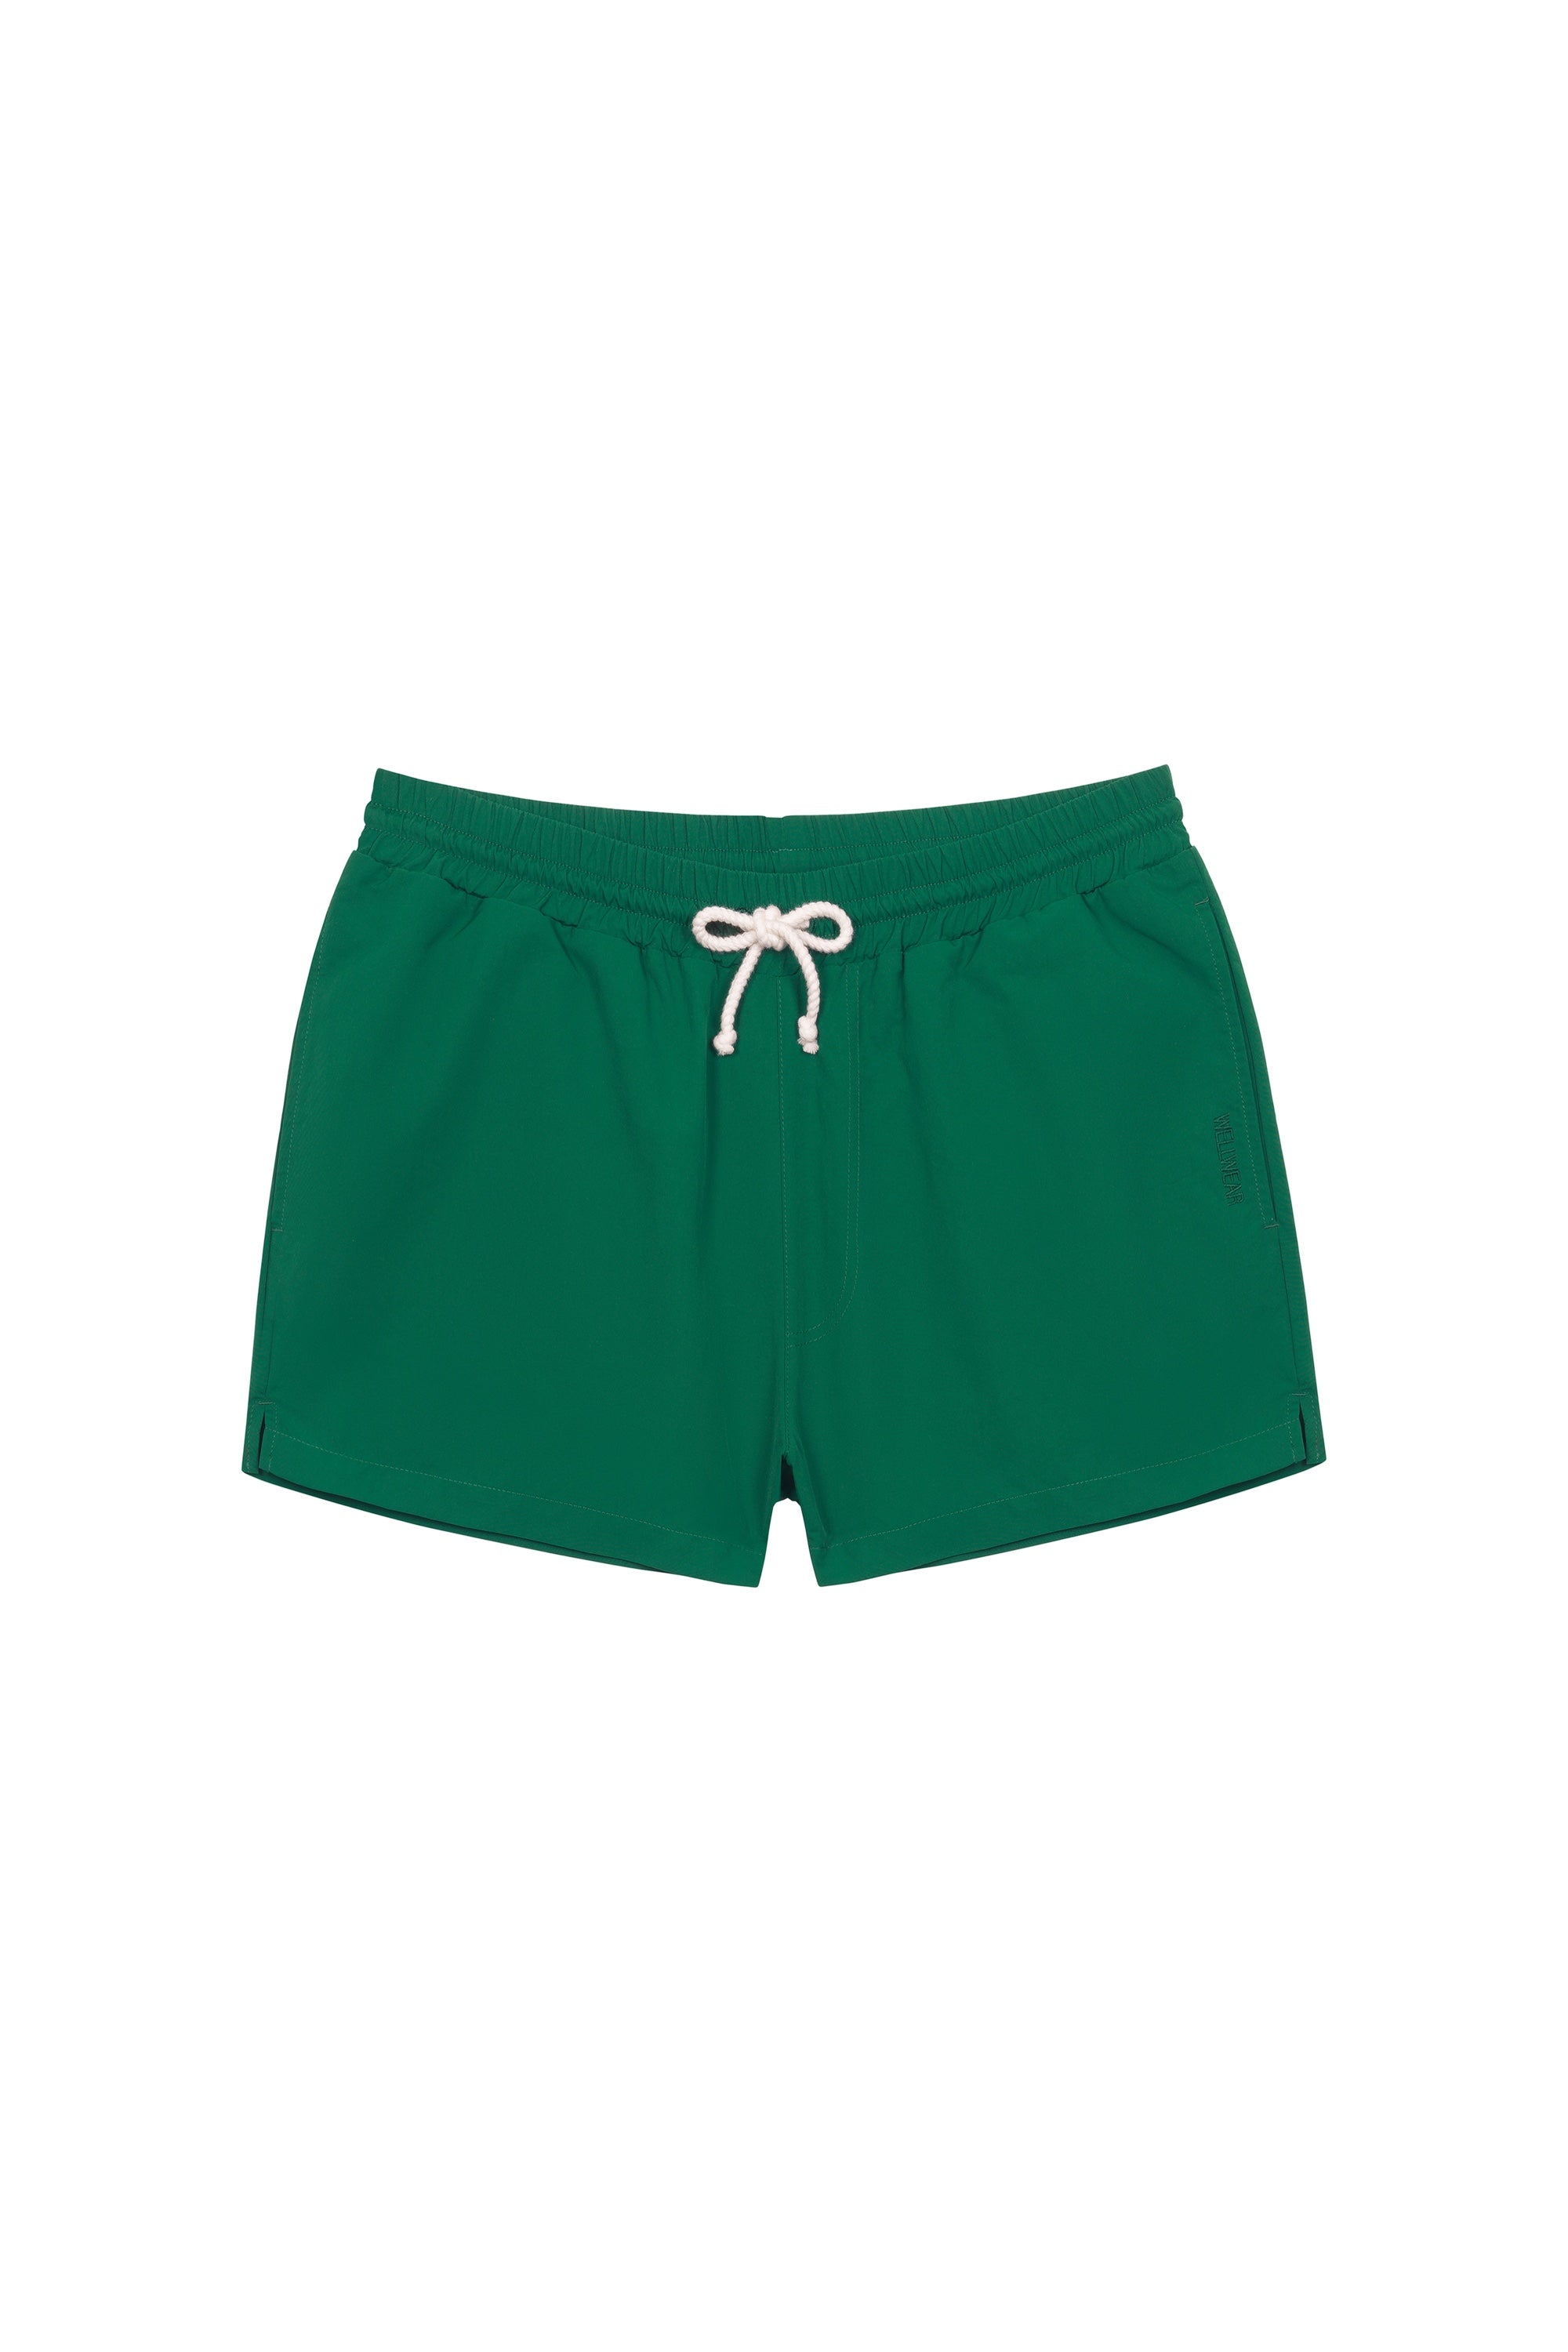 Short Length Swim Shorts - Forest Green | David Gandy Wellwear